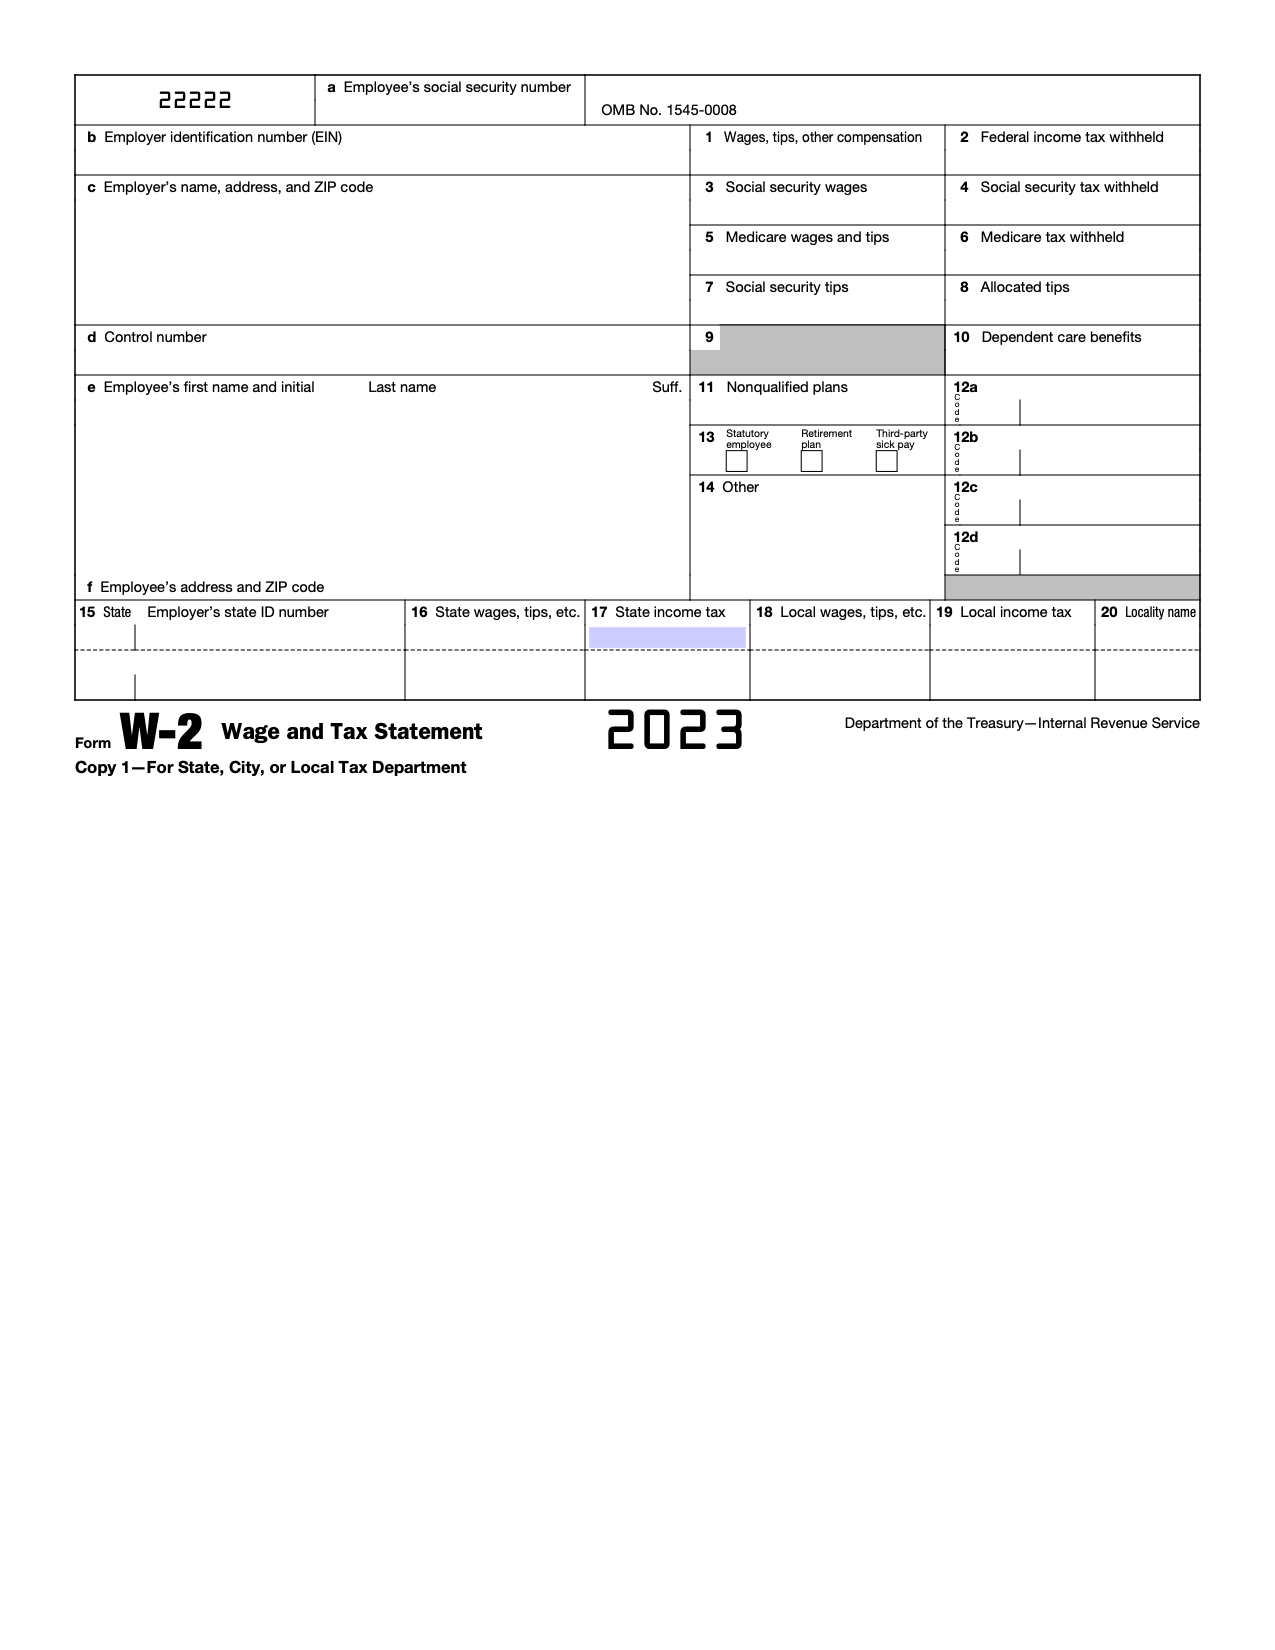 Free Irs Form W-2 | Wage And Tax Statement - Pdf – Eforms regarding W2 Form Template